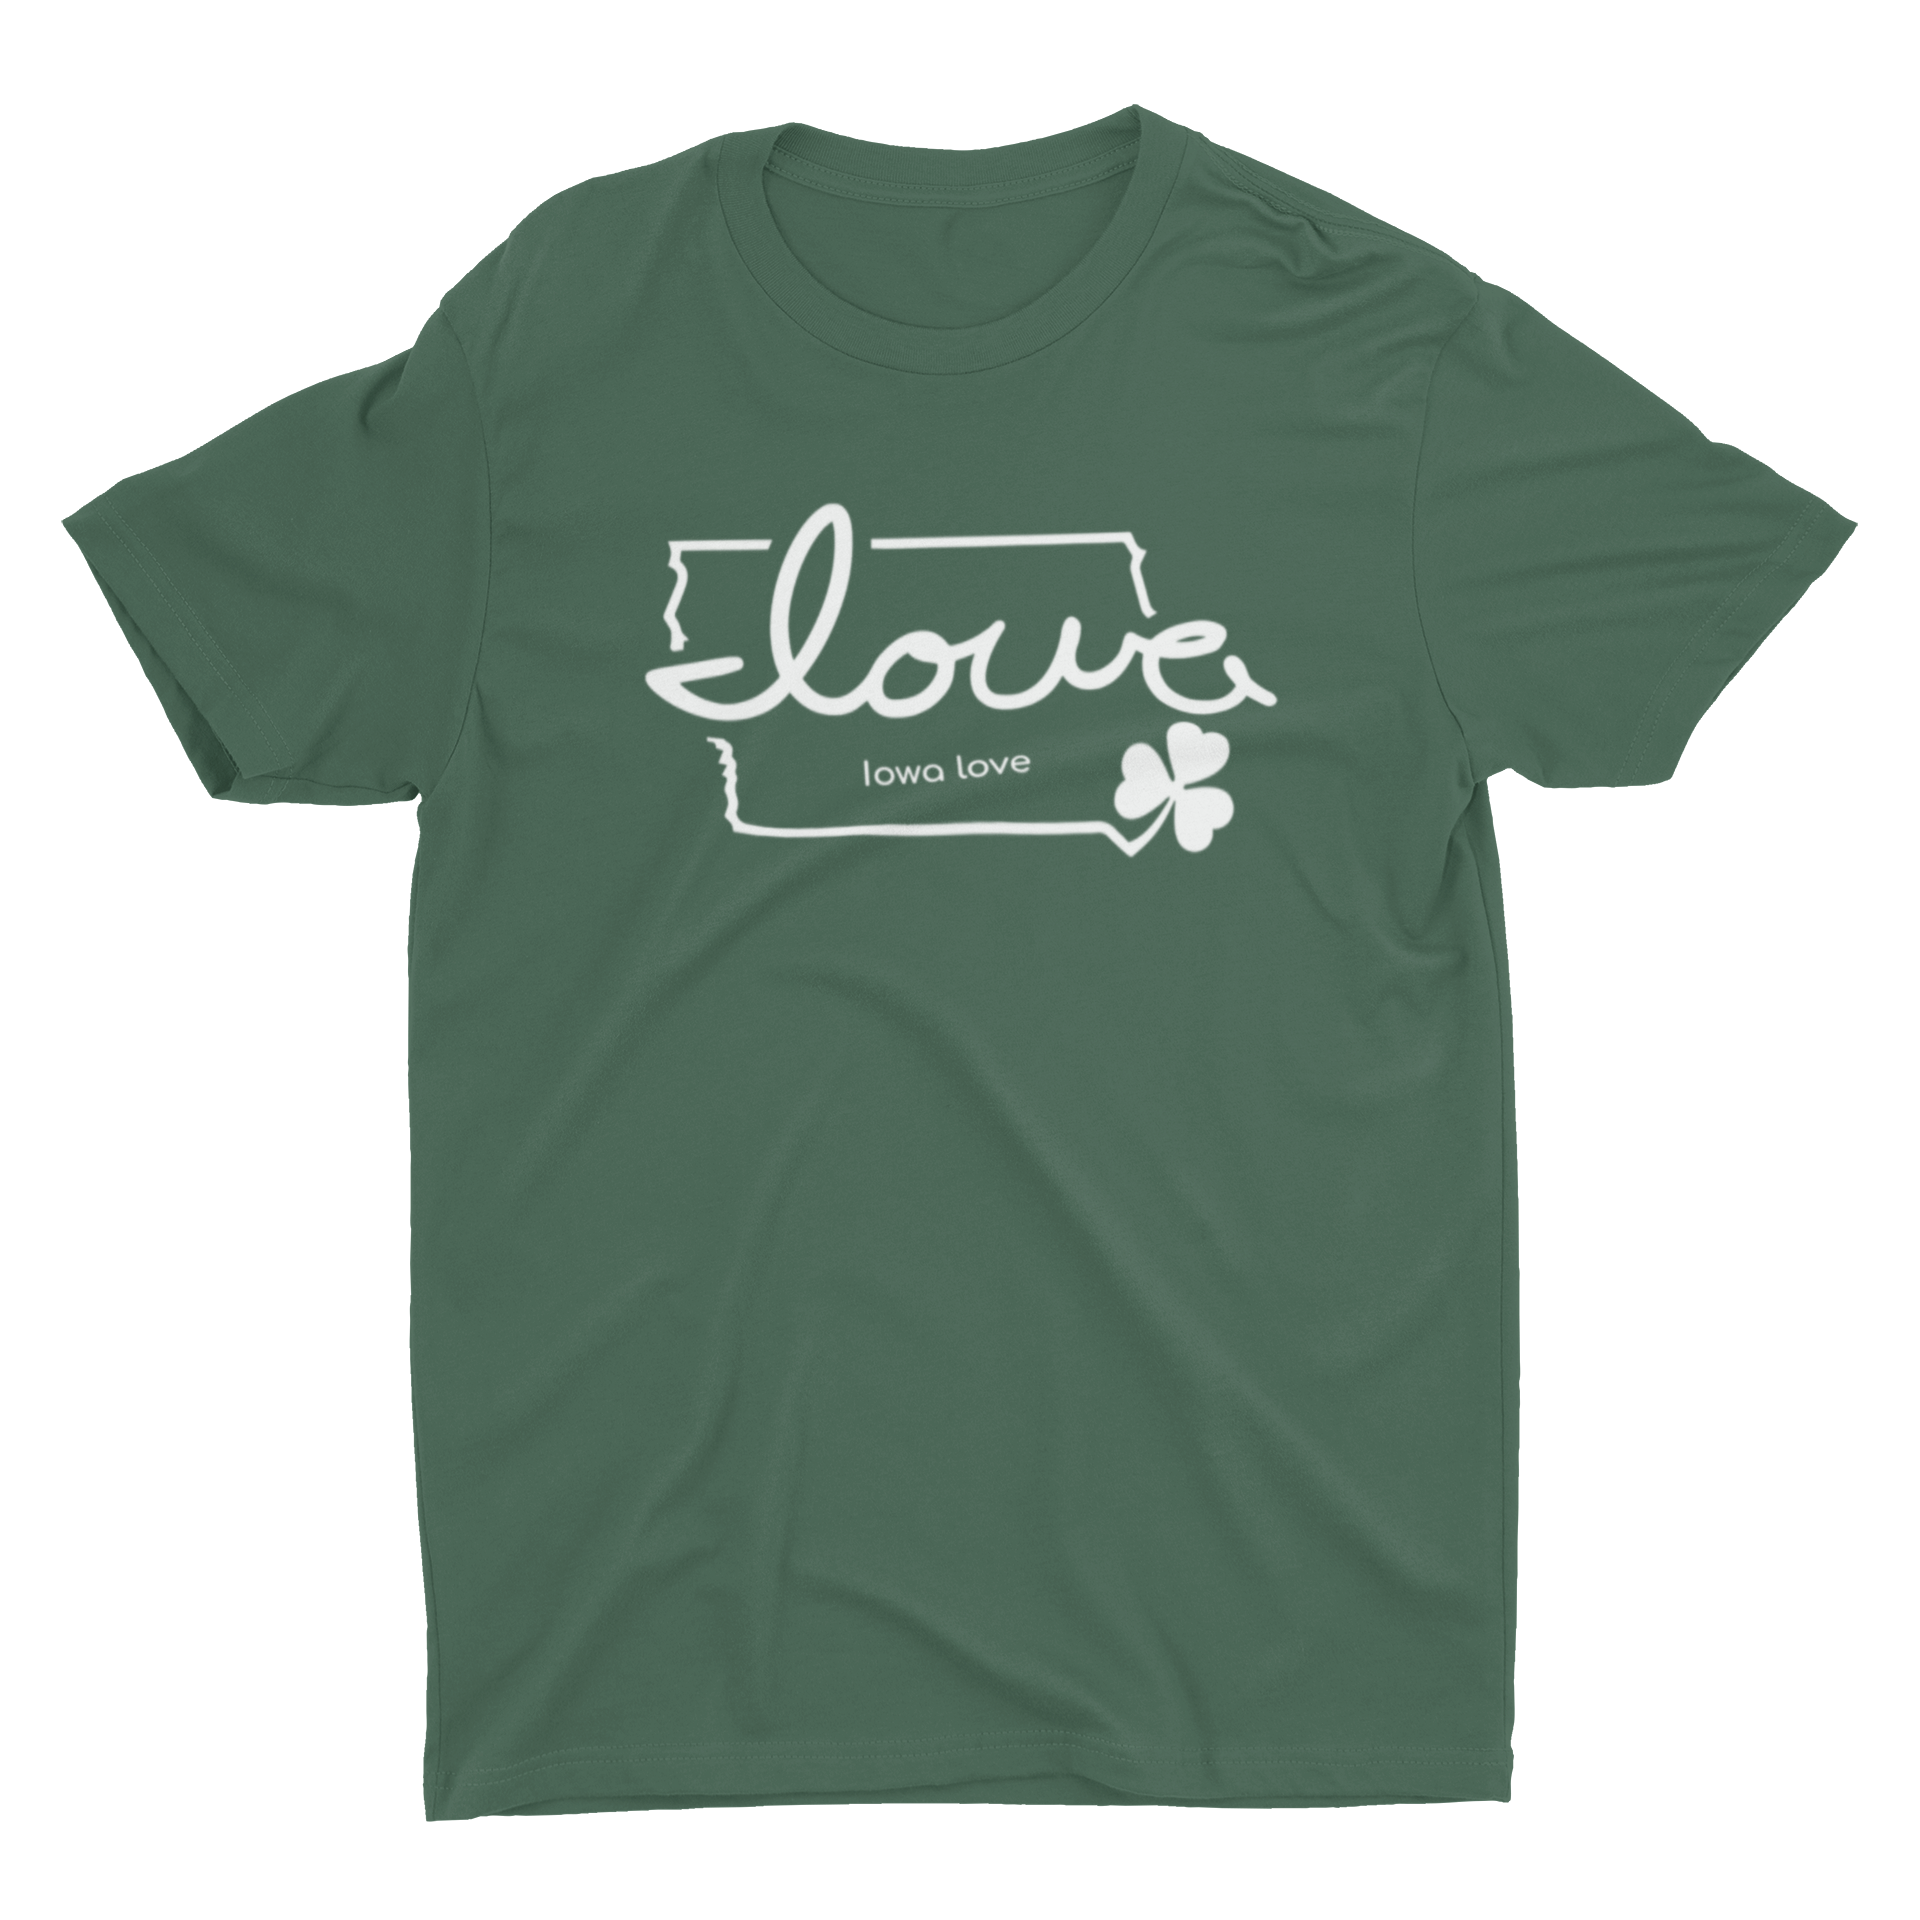 "Iowa love" with Clover T-Shirt